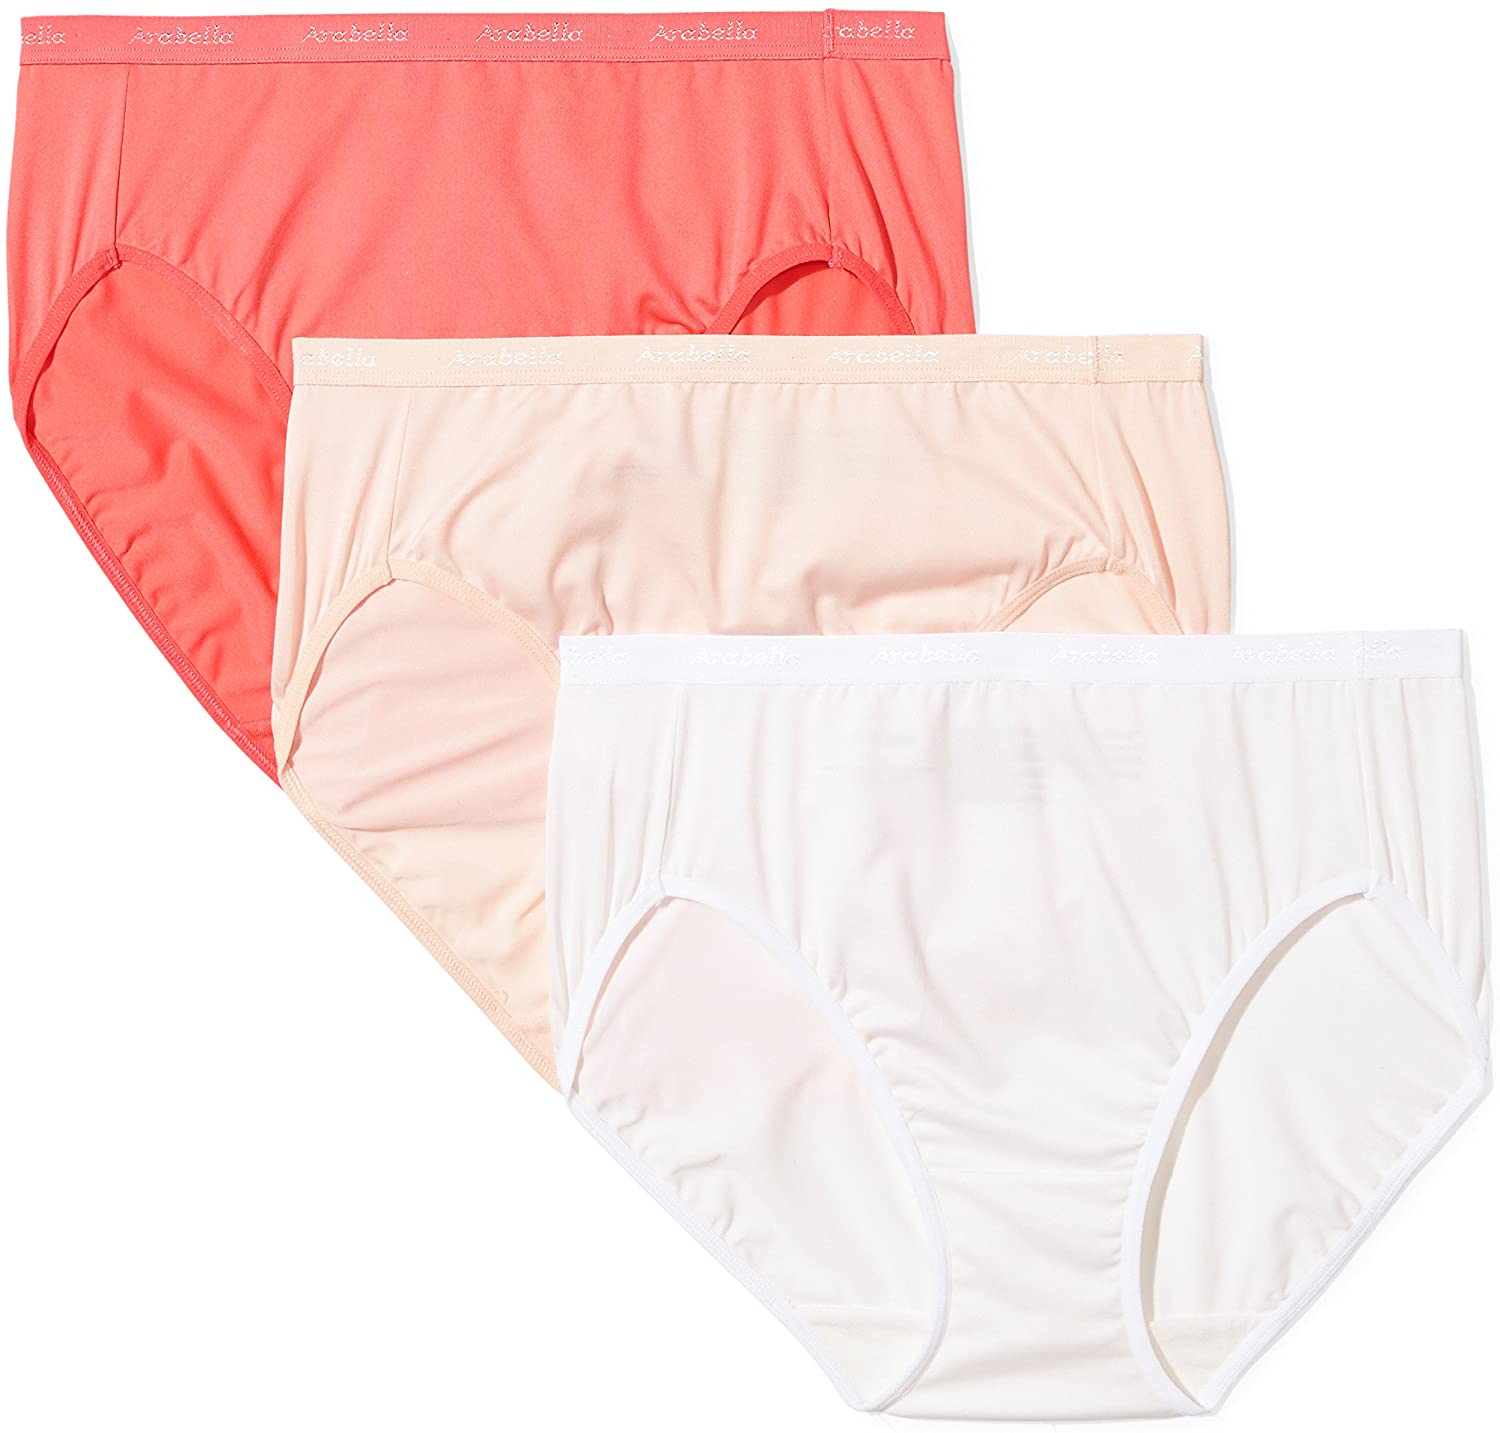 Price:$11.00    Amazon Brand - Arabella Women's Plus Size Microfiber Hi Cut Brief Panty, 3 Pack, White/Creole Pink/Calypso Coral, 1X Plus  Clothing